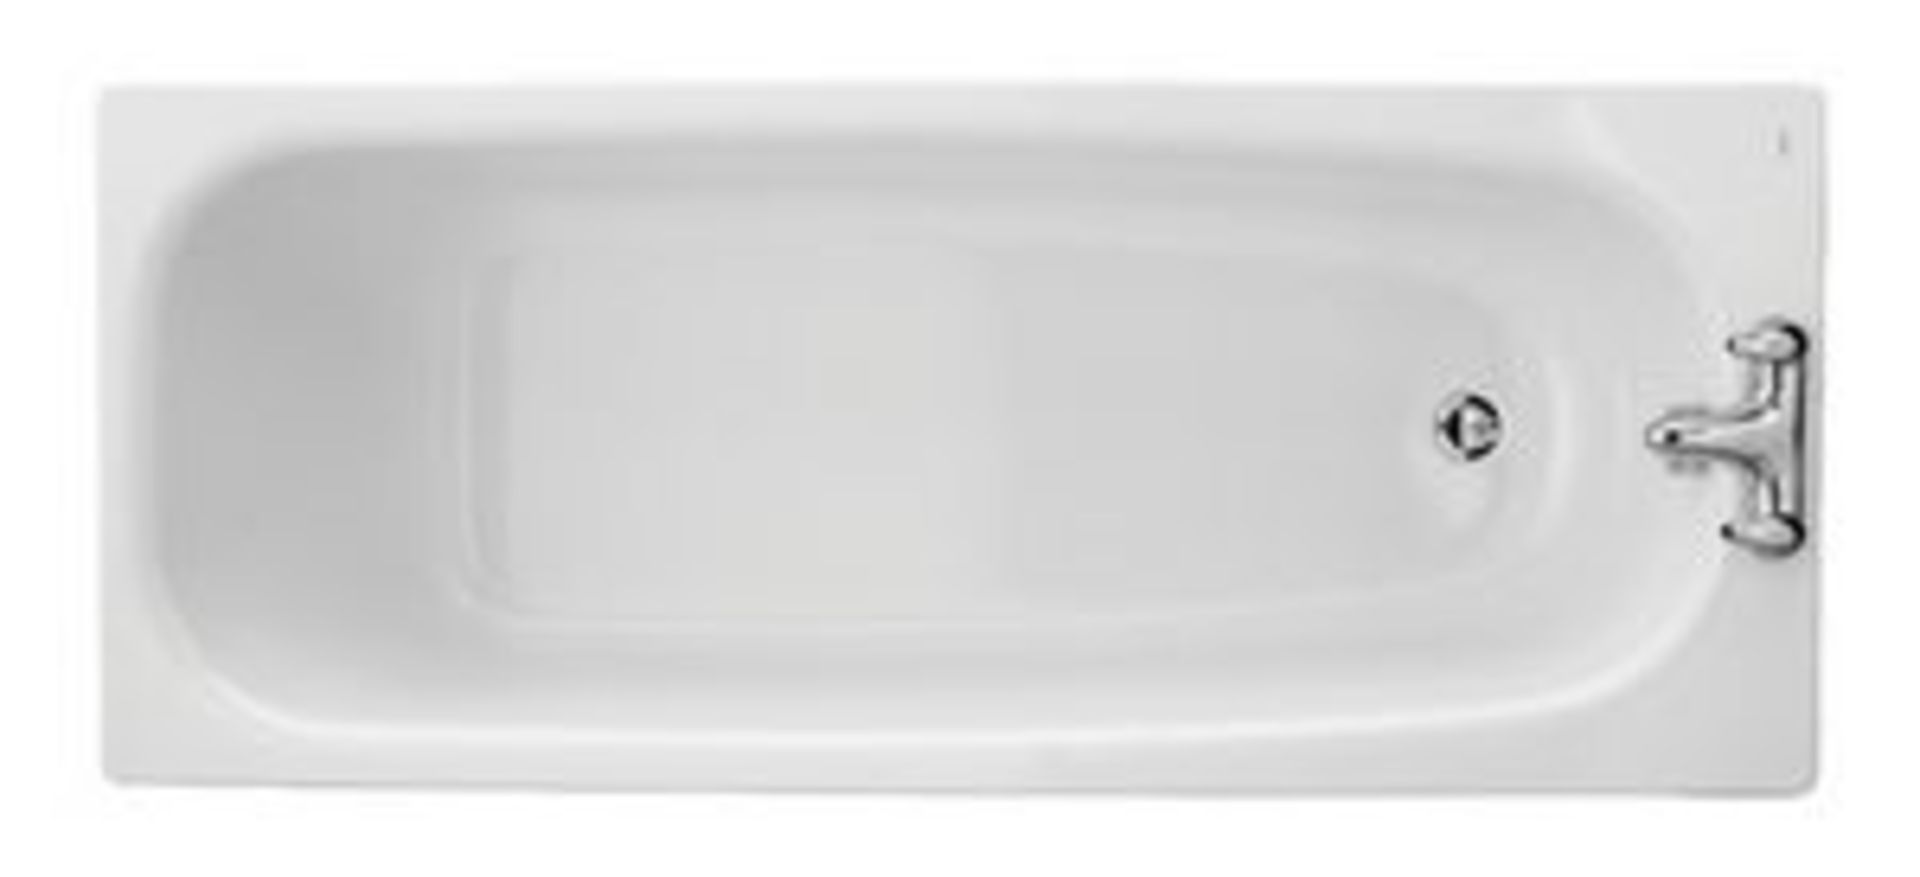 NEW (MR98)Twyford Neptune 2 tap hole standard bath 1700 x 700mm White. RRP £340.99. Twyford Ne... - Image 2 of 2